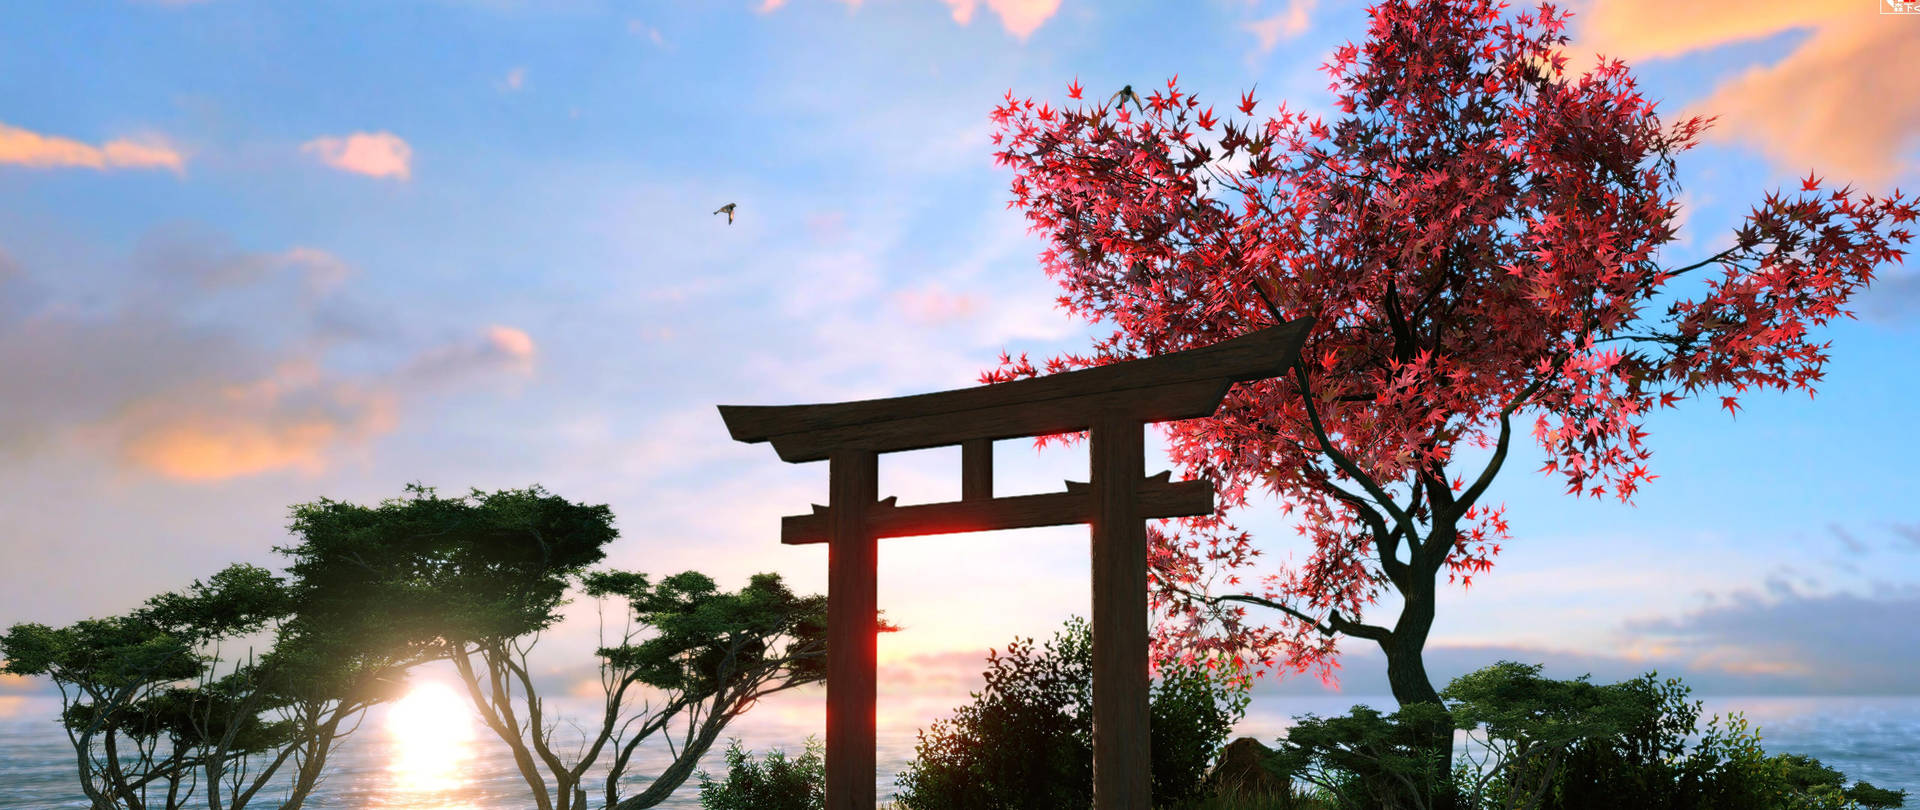 Torii Gate Background Wallpaper